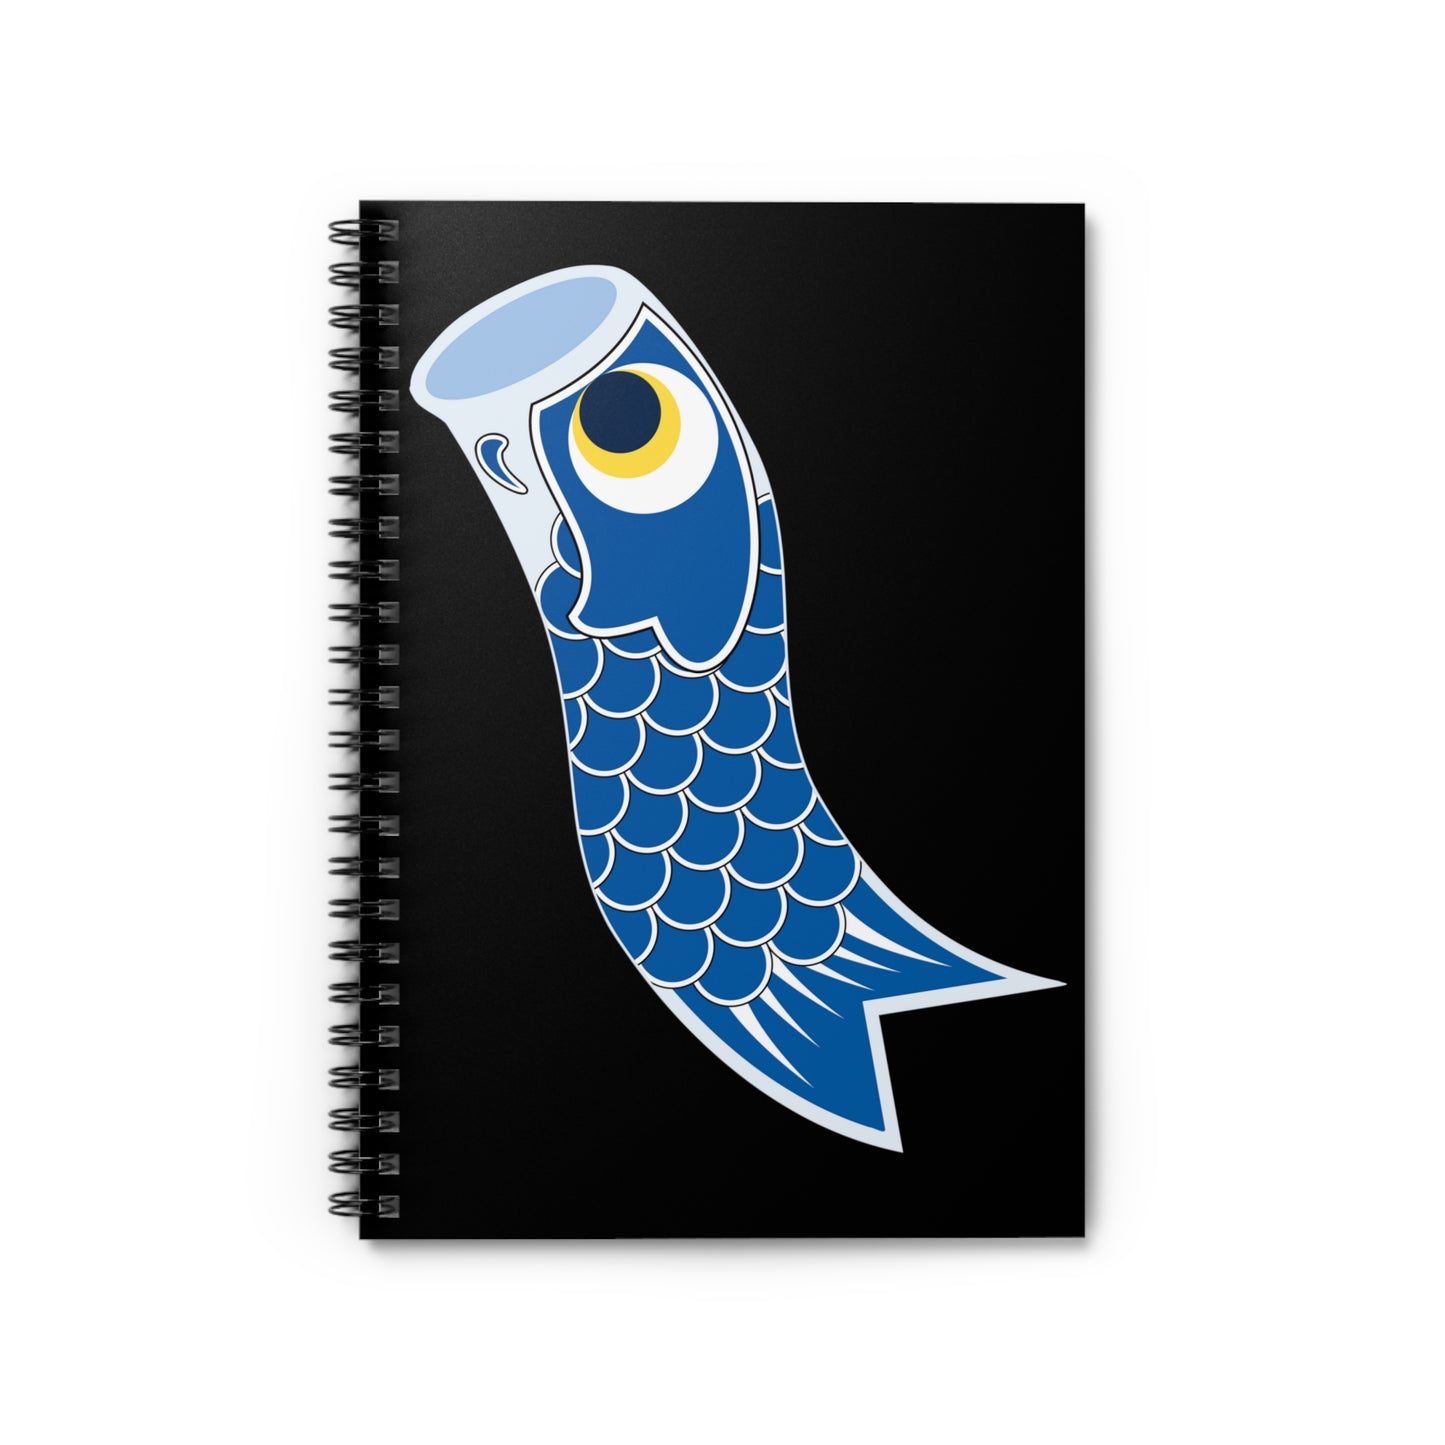 Blue Koinobori (Carp Streamer) on Black Spiral Notebook - Ruled Line